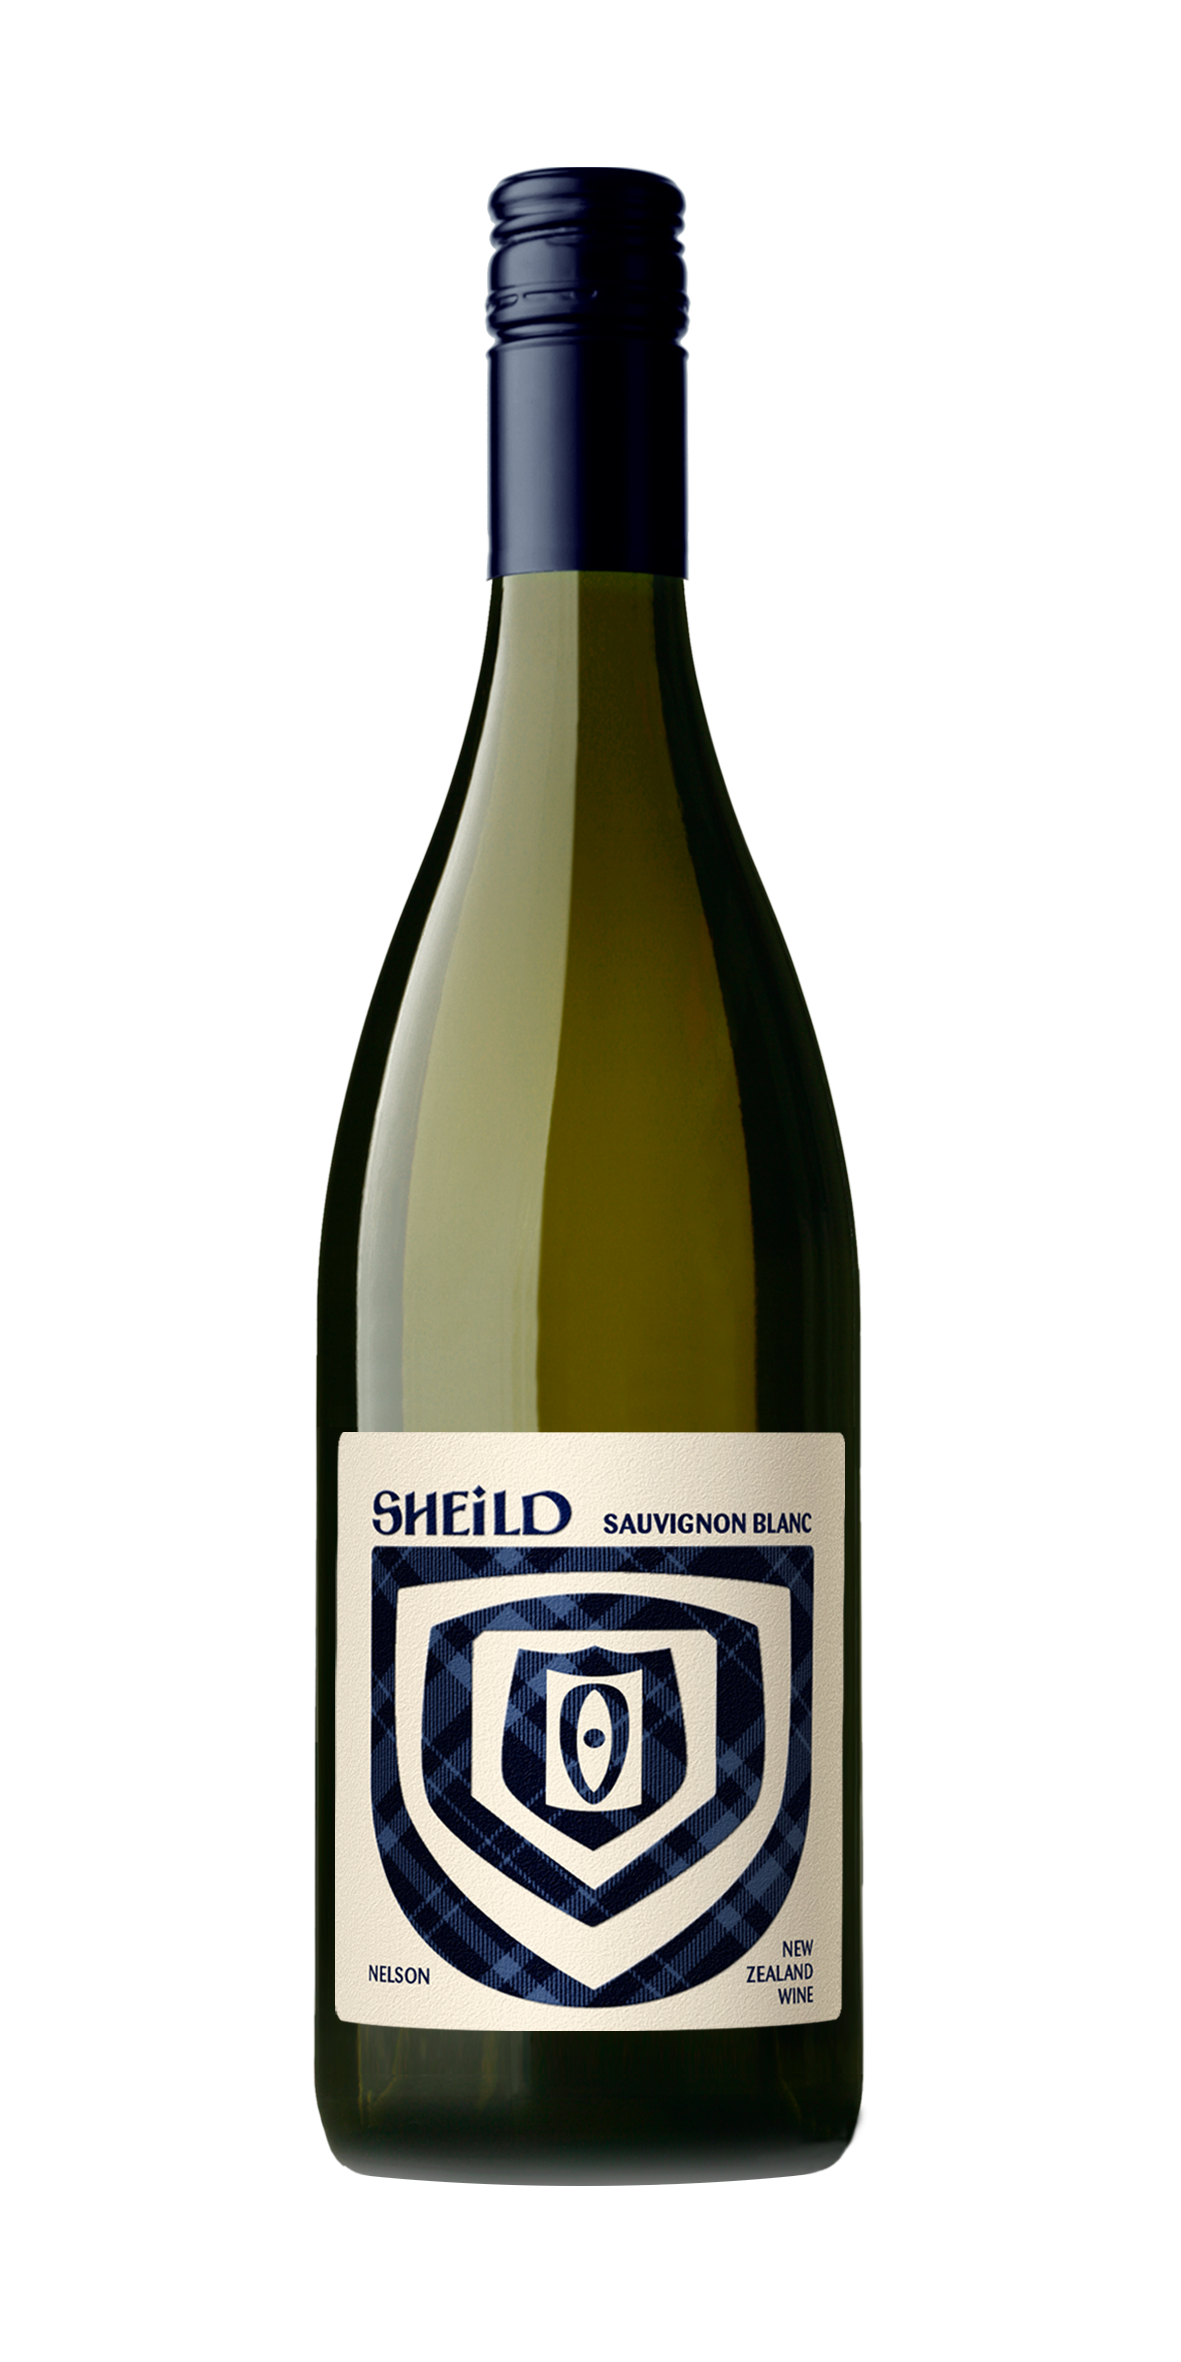 Bottle of SHEiLD's Sauvignon Blanc wine, with light yellow label and dark blue cap/logo.